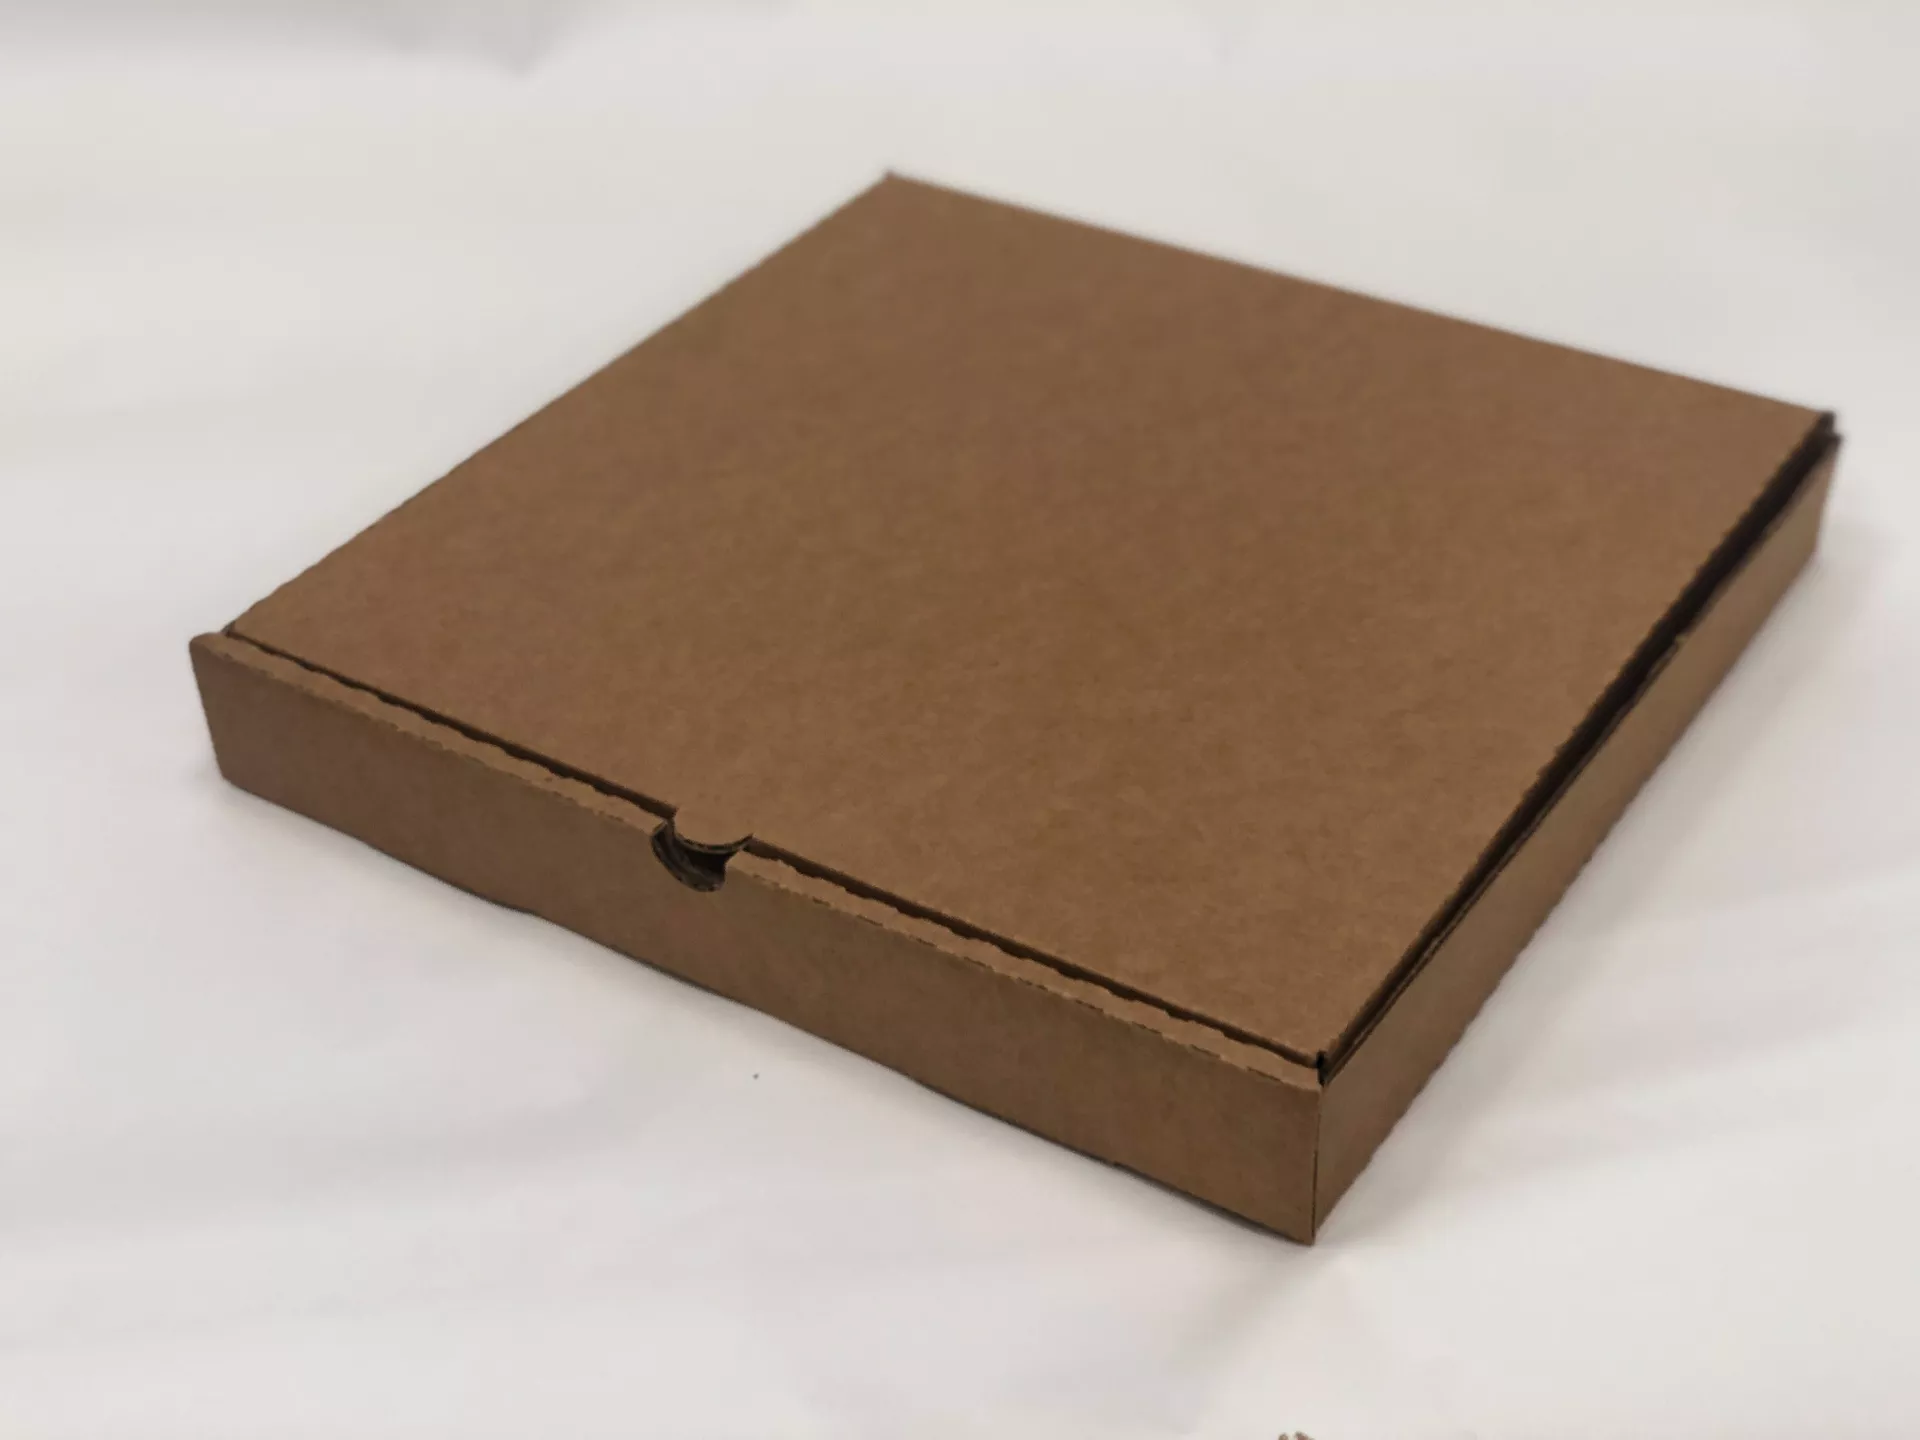 Коробка под пиццу 32 см (Бурая)